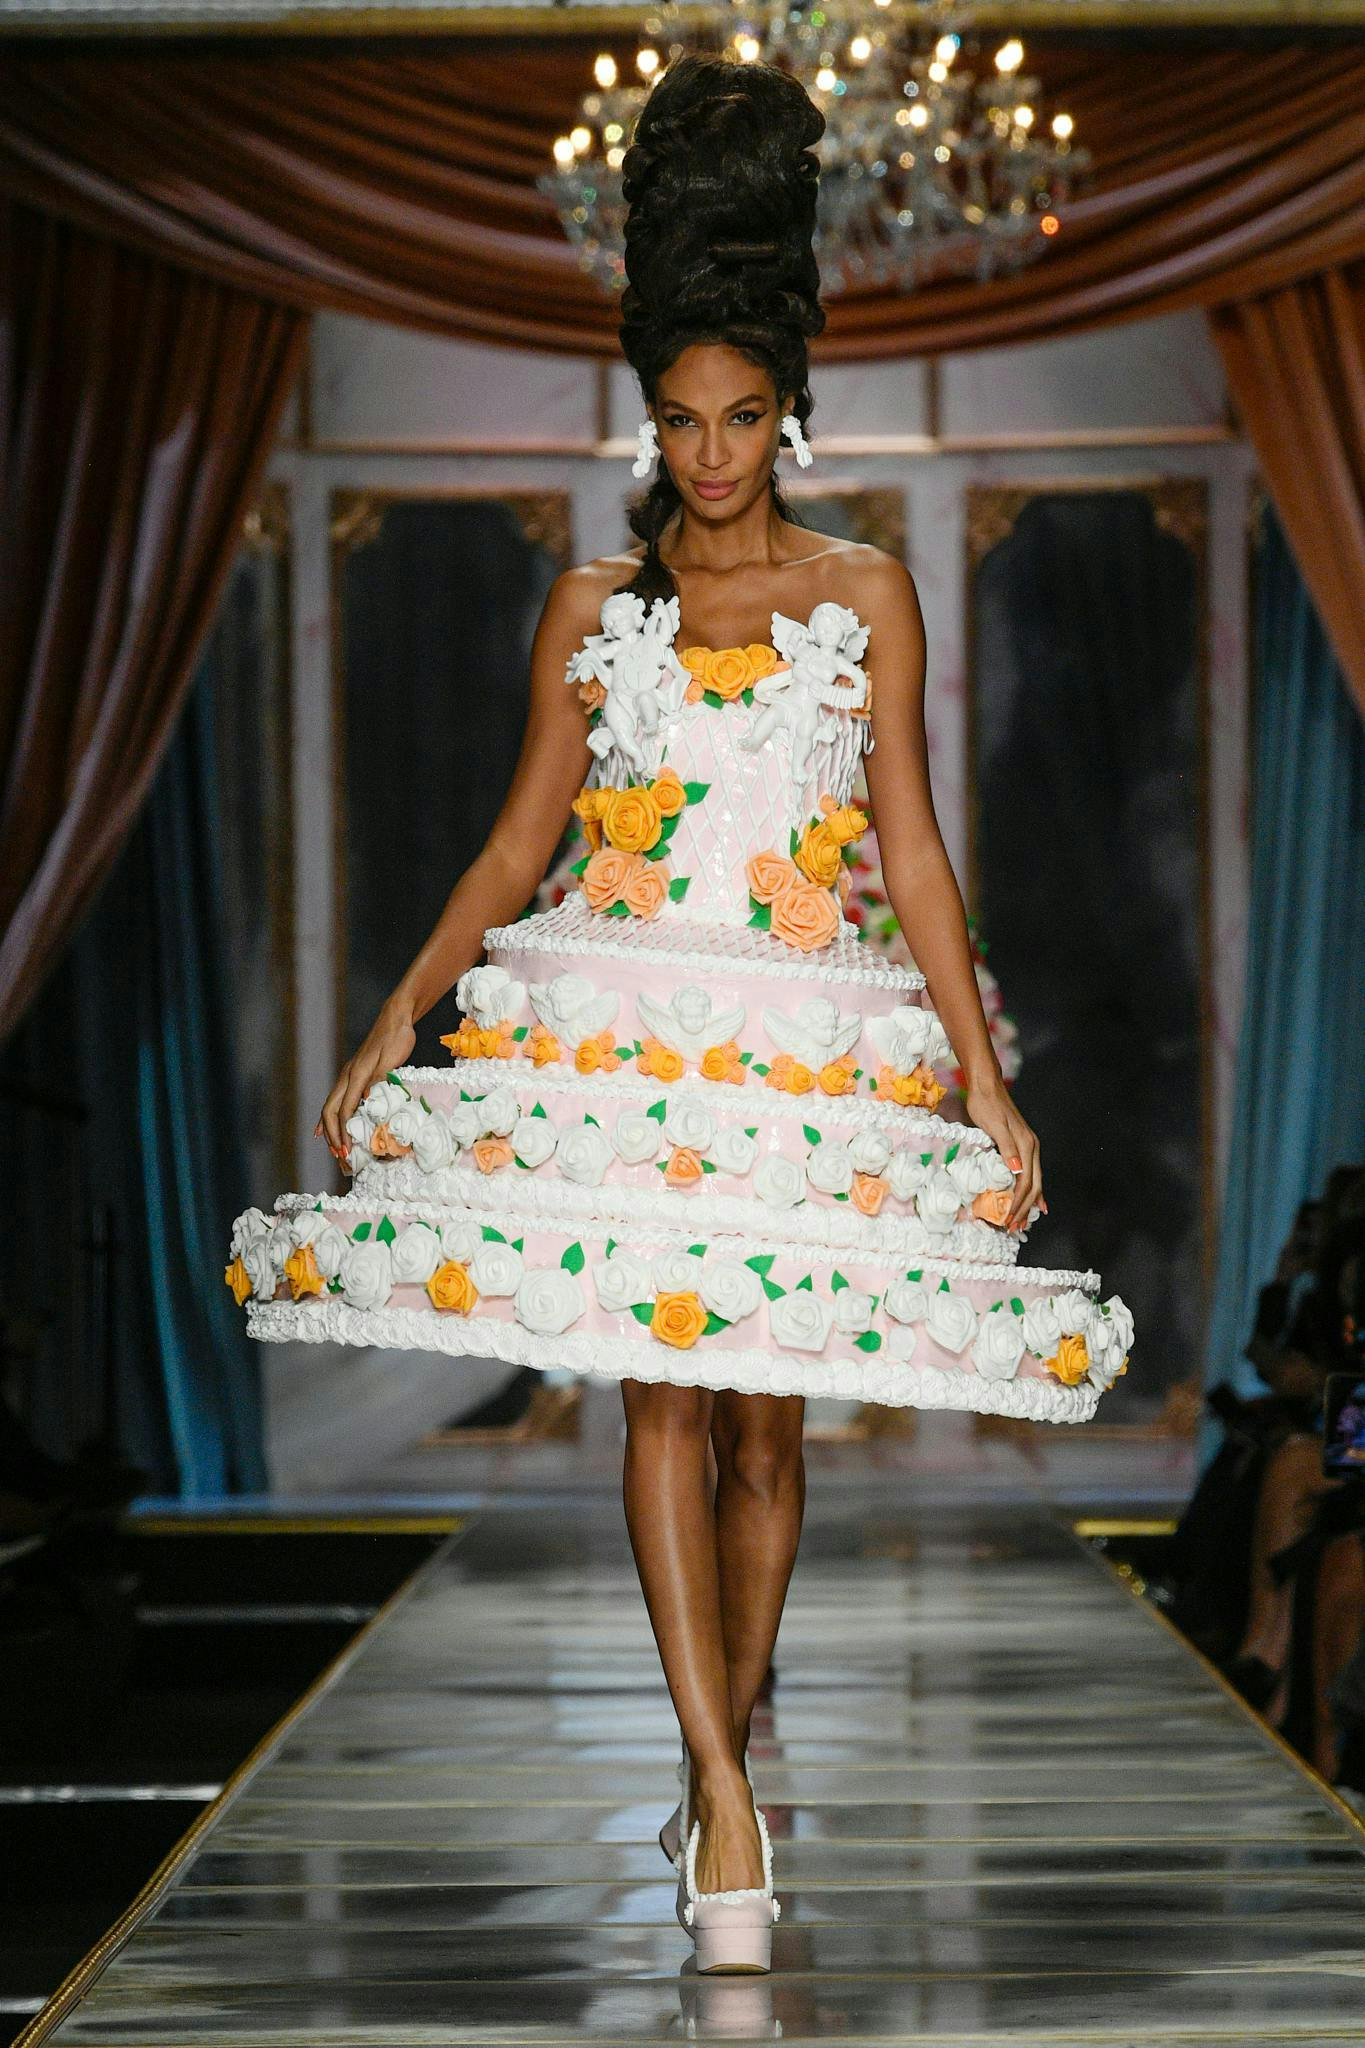 moschino rtw fall 2020 milan clothing dress fashion evening dress formal wear adult female person woman wedding cake